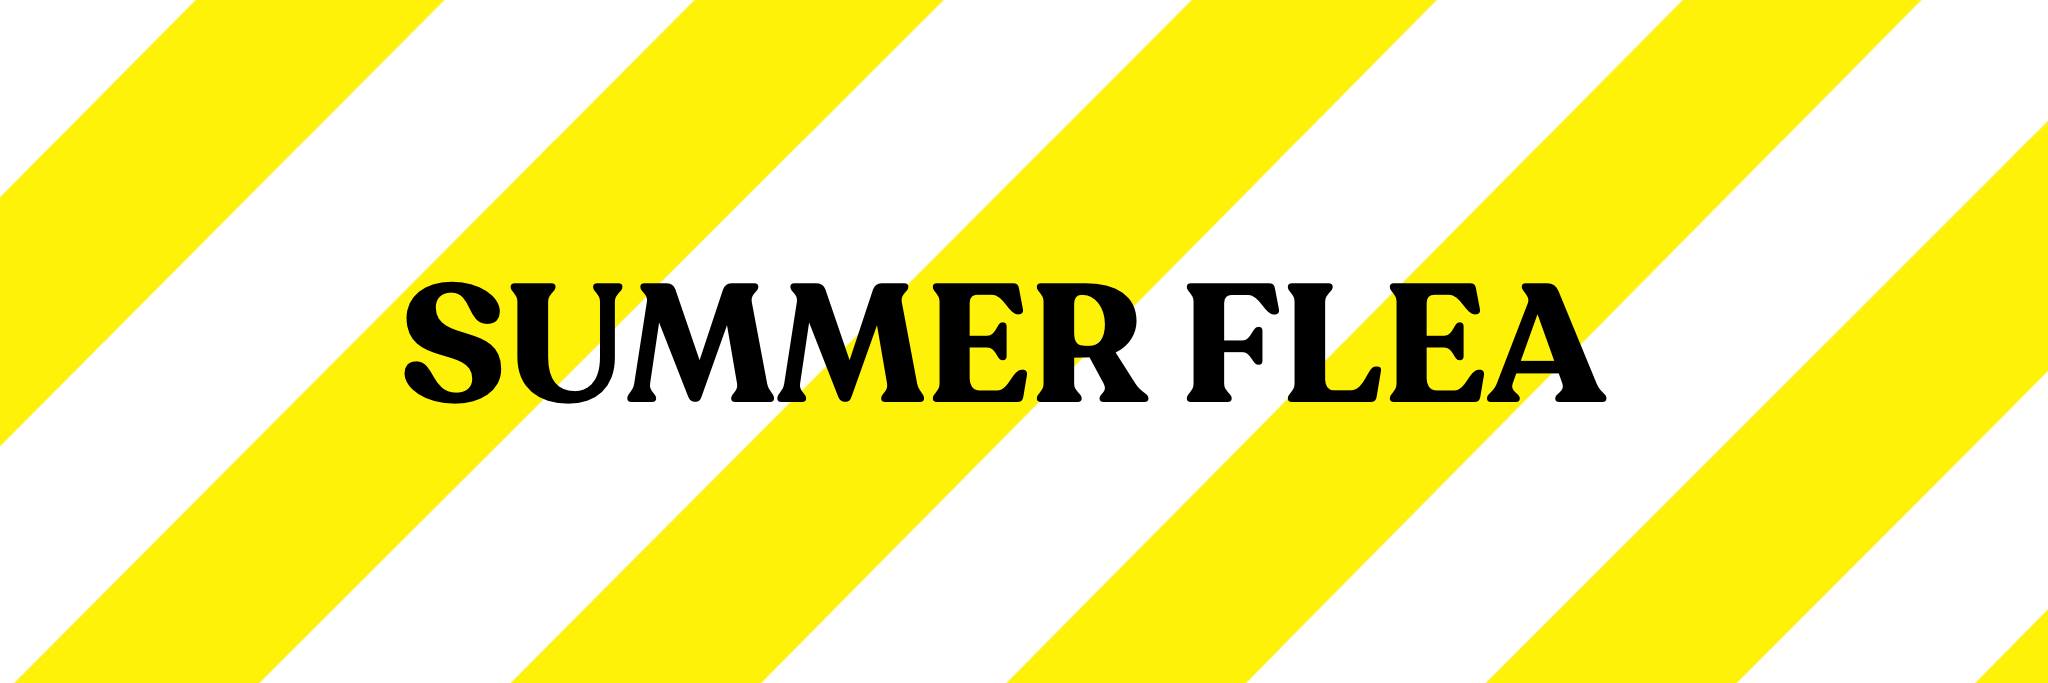 Summer FLEA Cover Photo